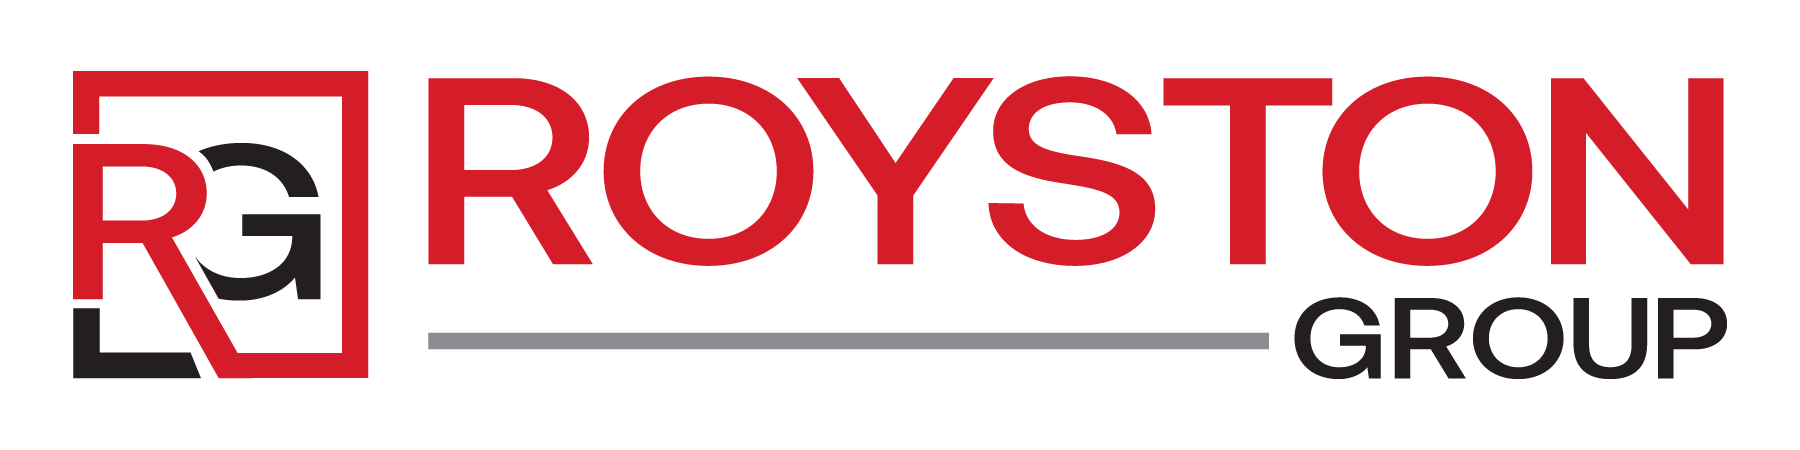 RoystonGroup-Logo-Horz-FINAL-RGB300-081023